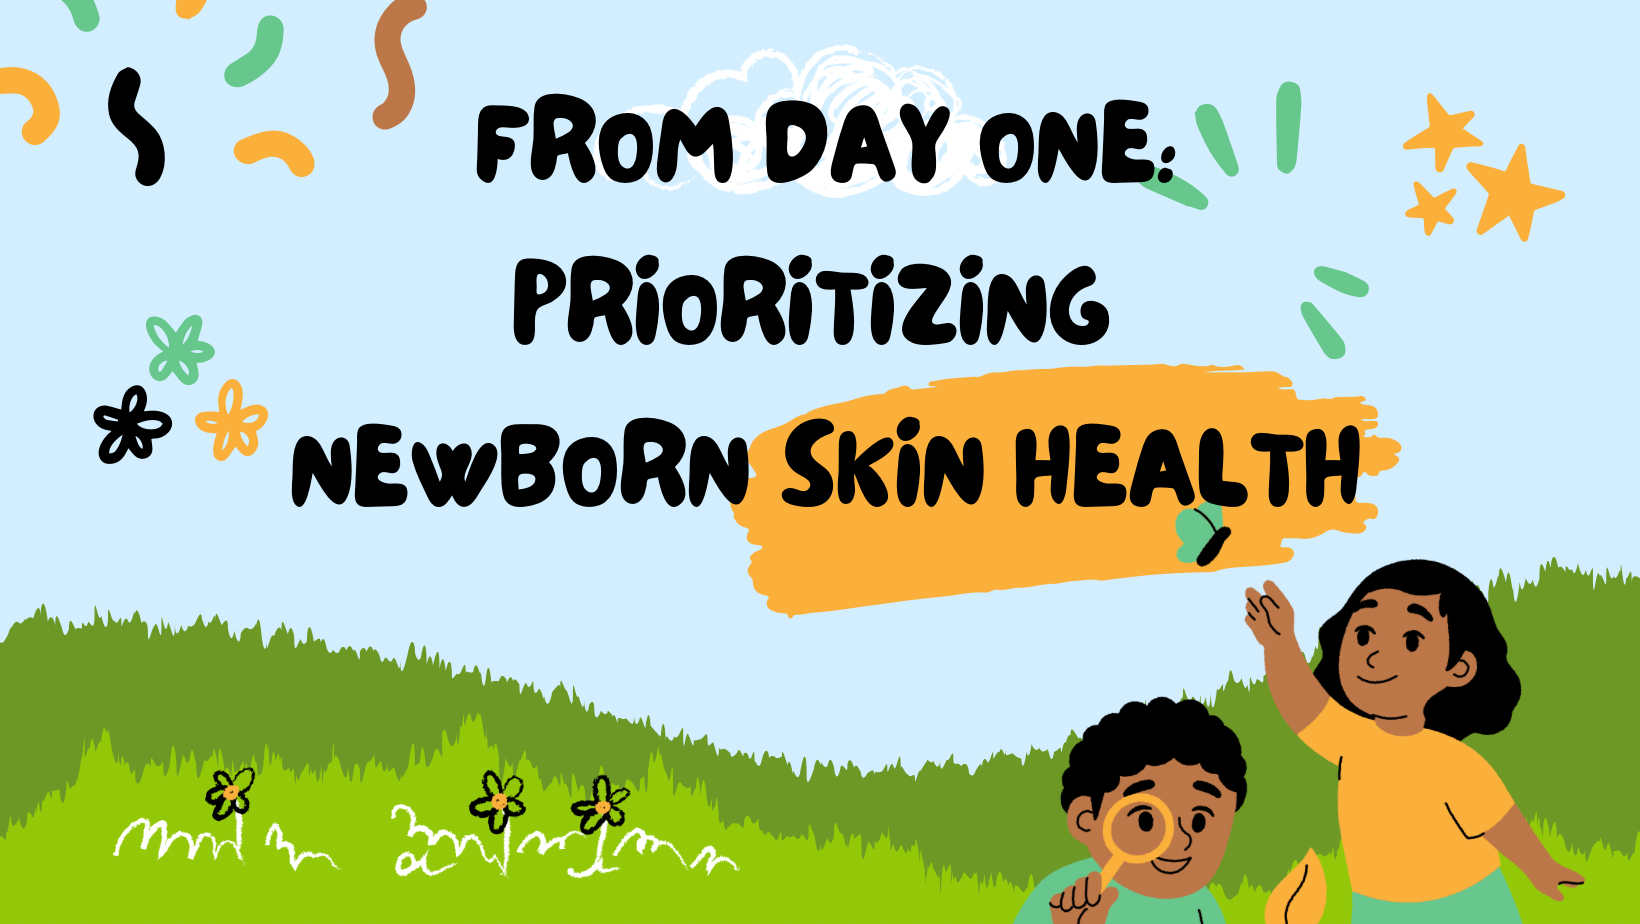 Baby skin care